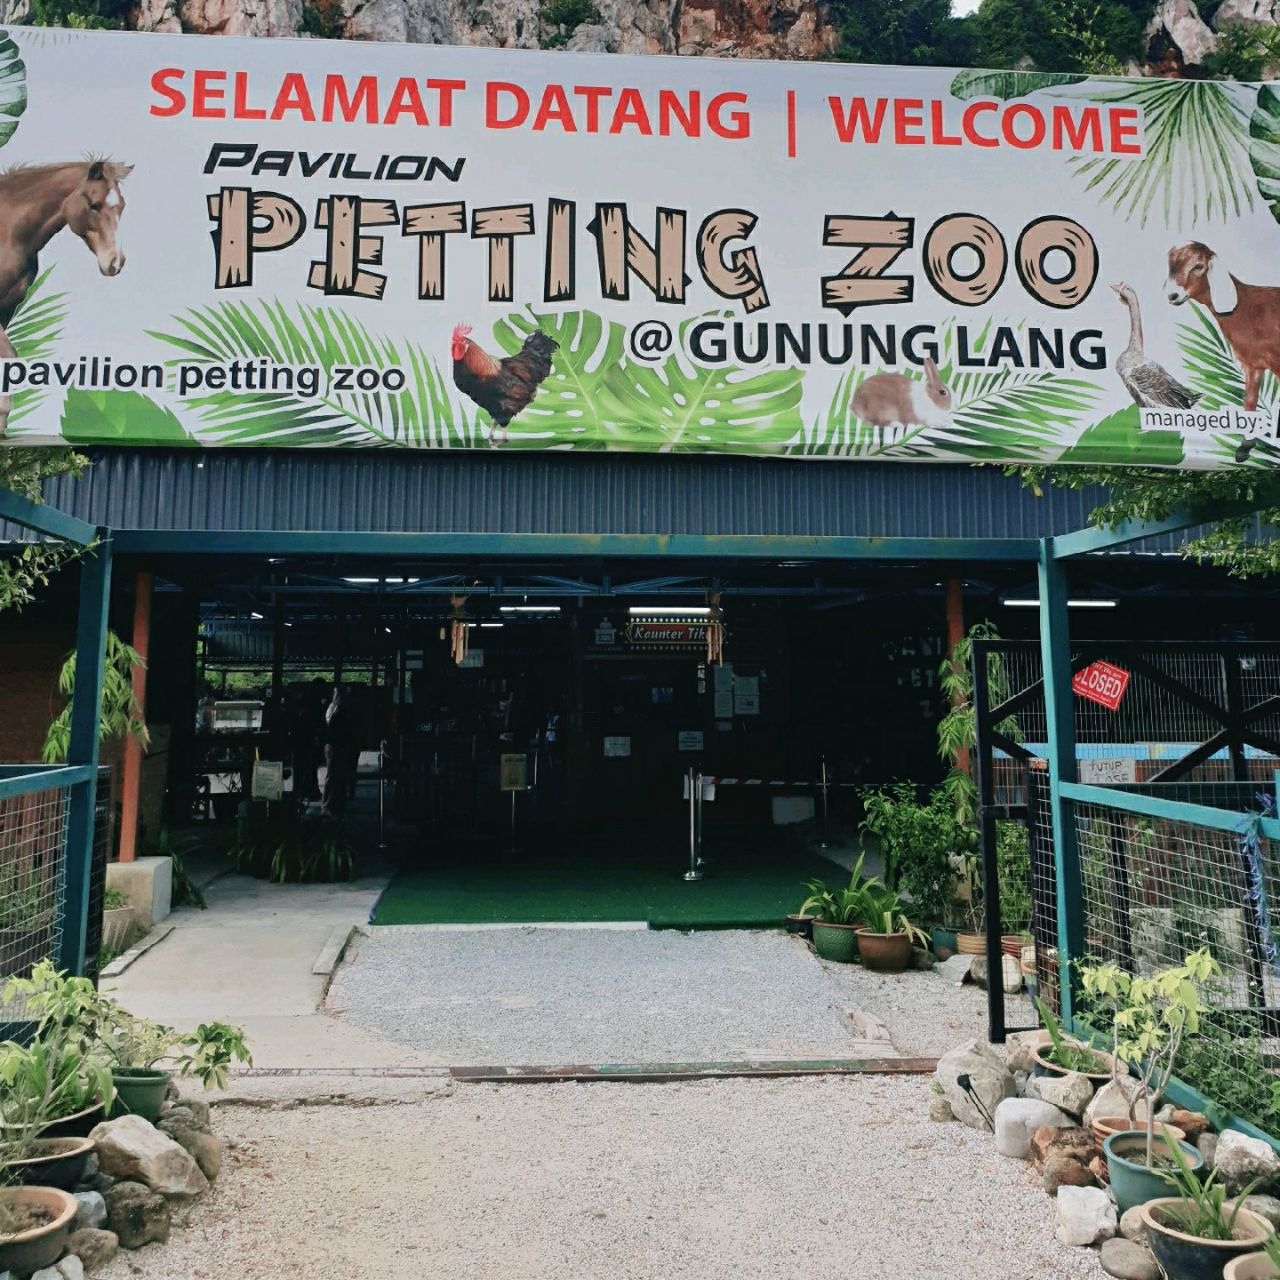 Petting zoo gunung lang